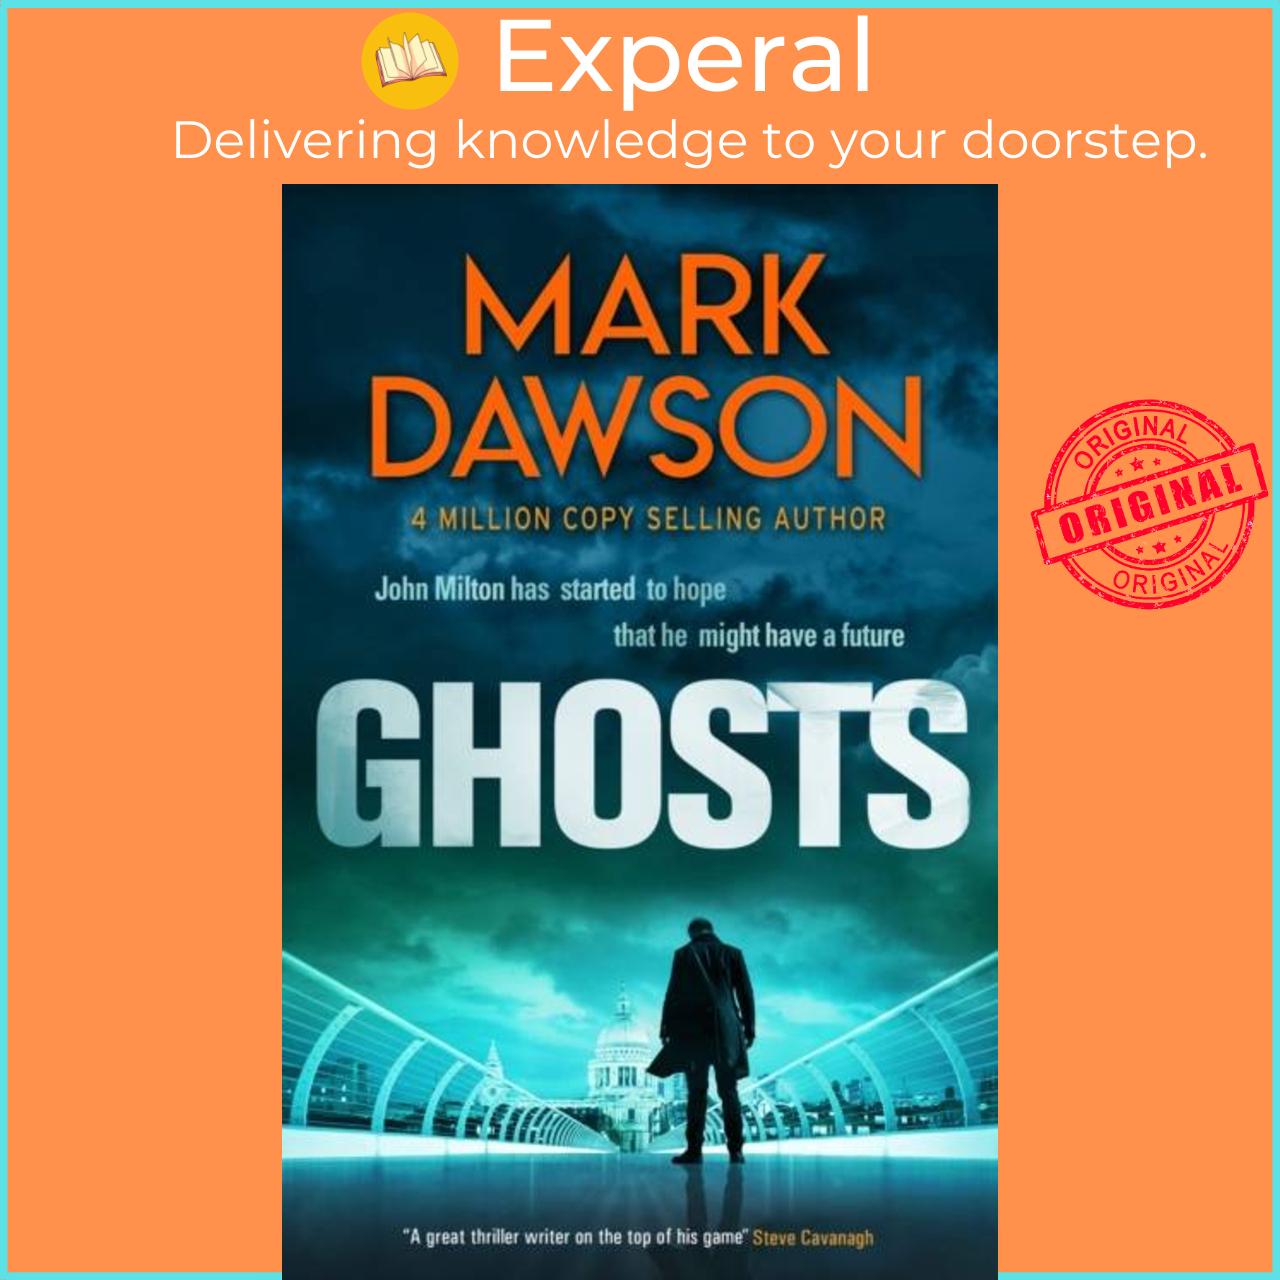 Sách - Ghosts by Mark Dawson (UK edition, hardcover)